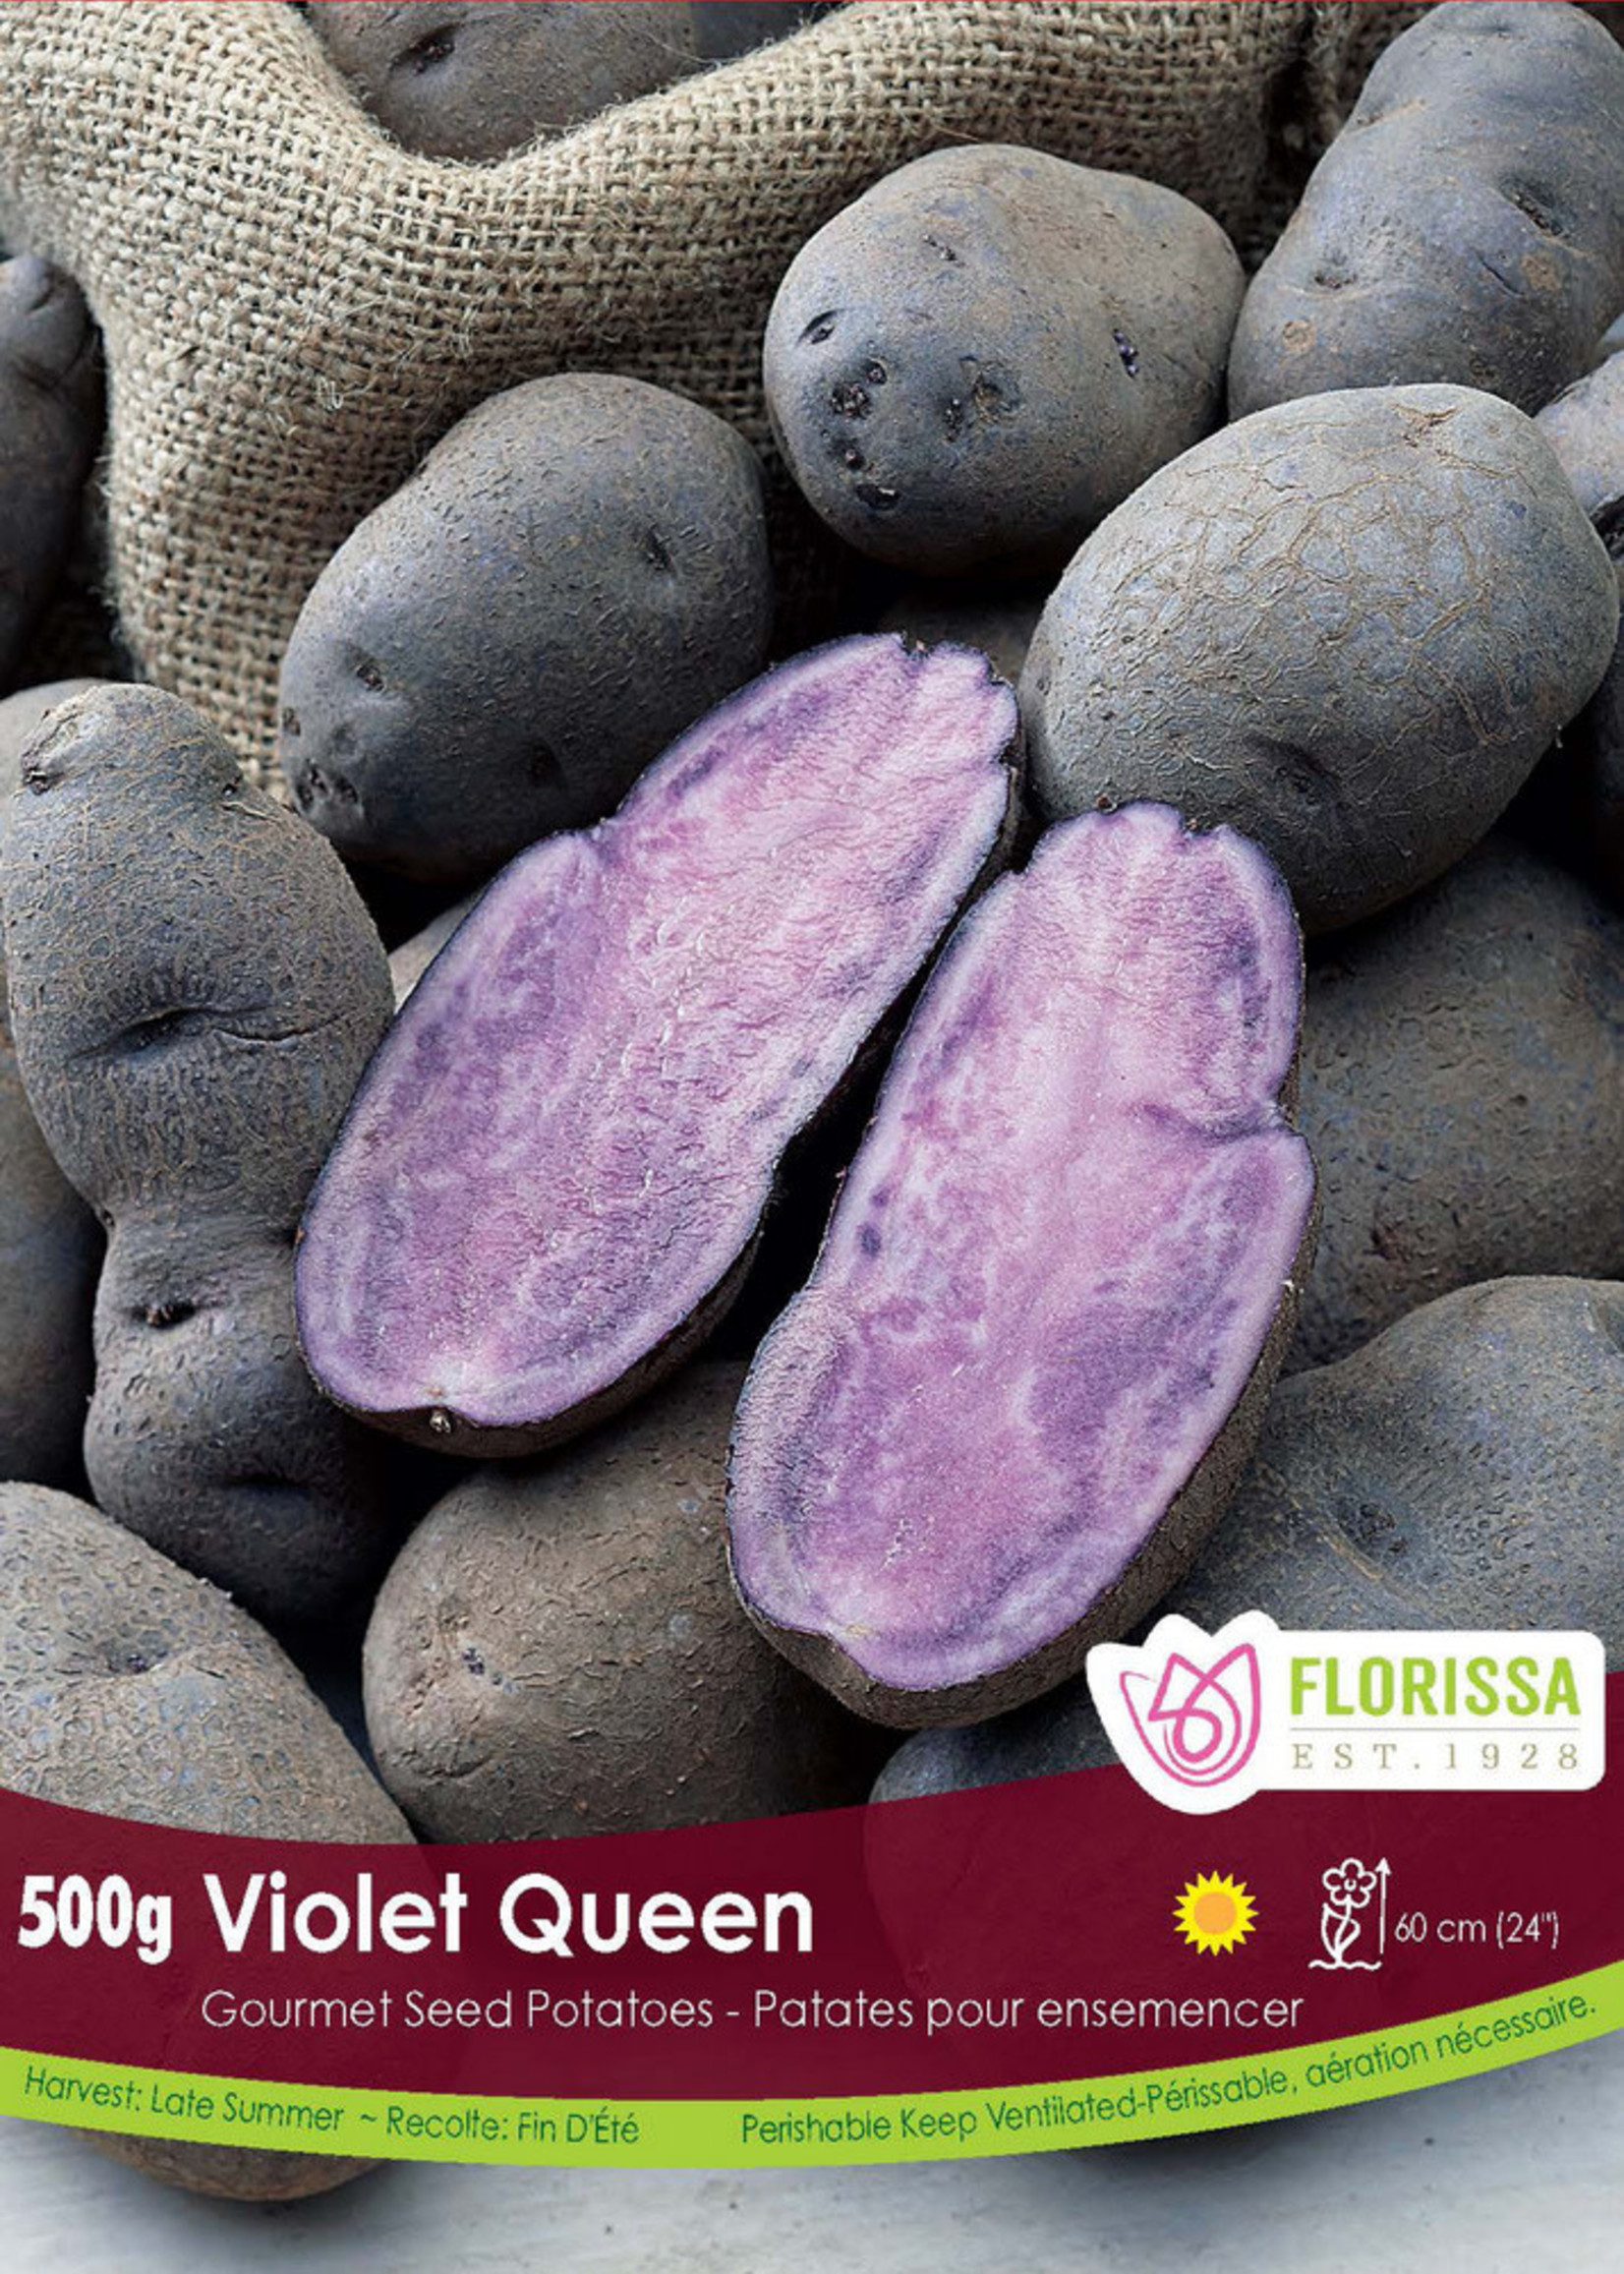 Florissa 500 g Violet Queen Gourmet Potato